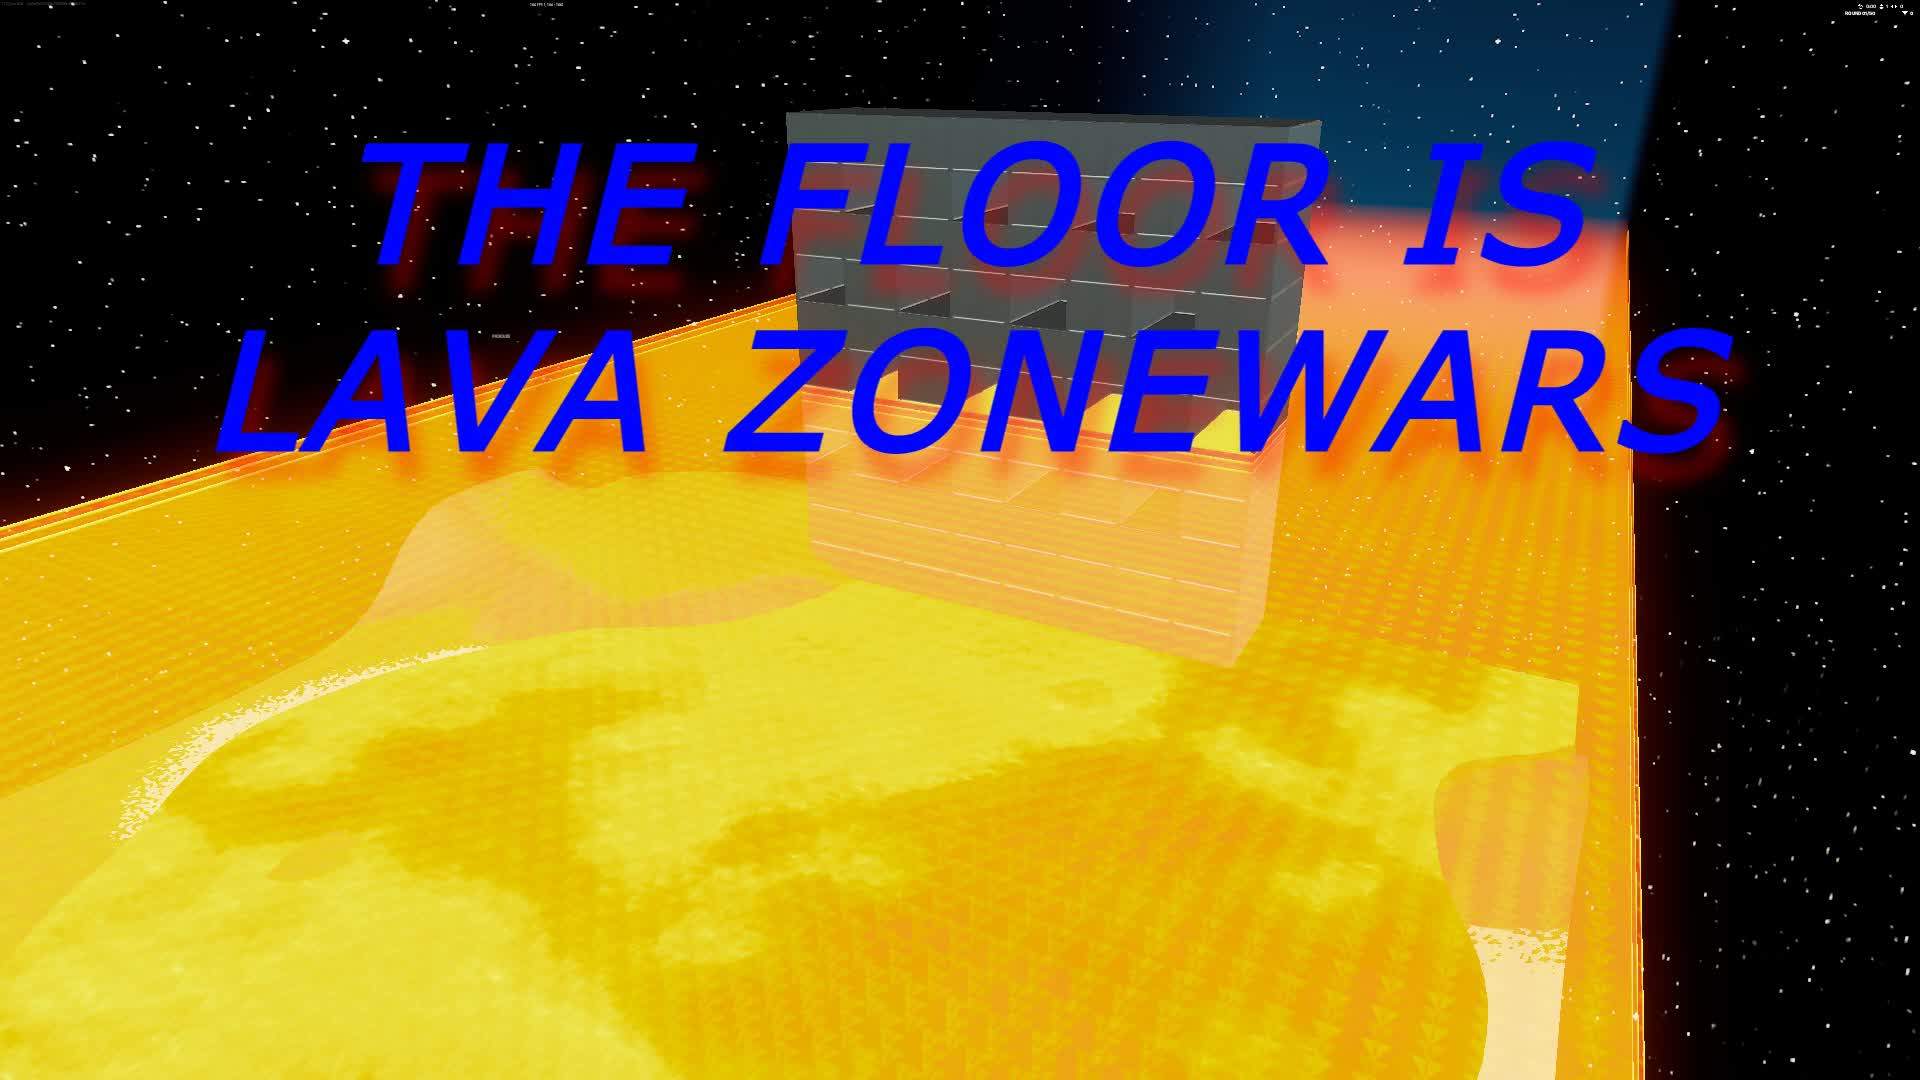 THE FLOOR IS LAVA ZONEWARS